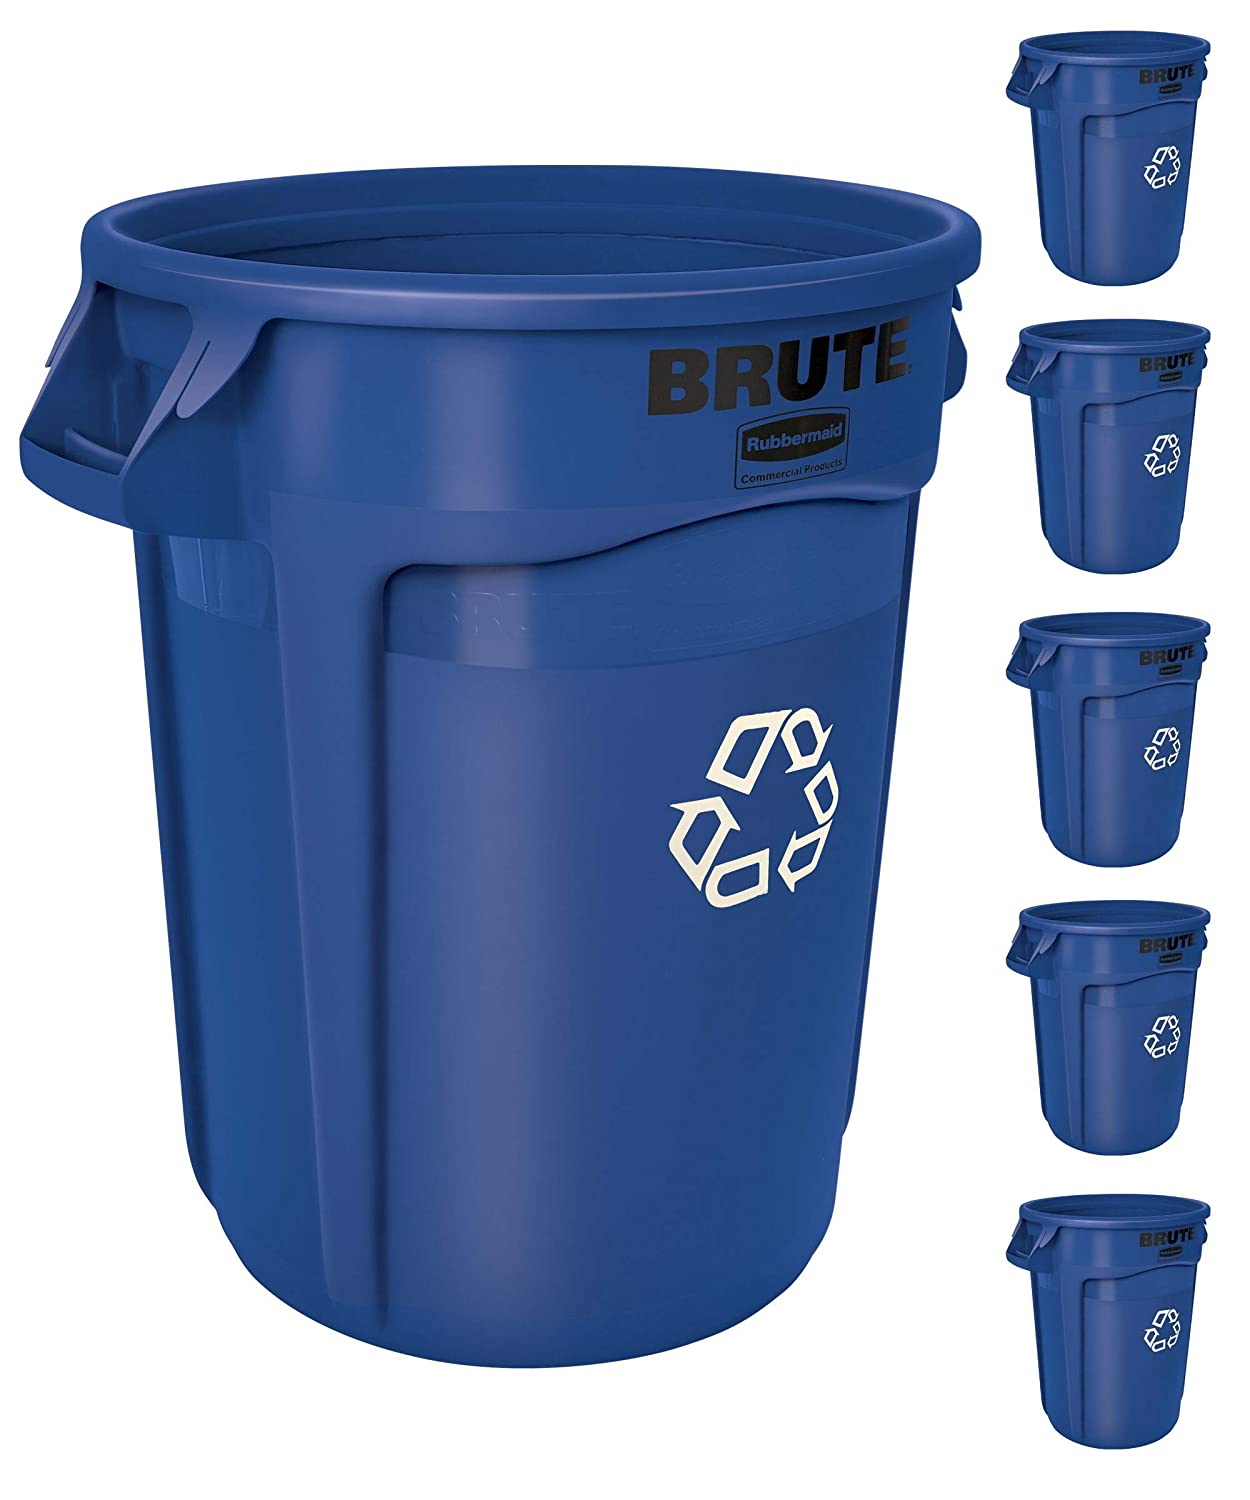 https://www.dontwasteyourmoney.com/wp-content/uploads/2019/10/rubbermaid-fg263273-brute-heavy-duty-round-recycling-bin.jpg